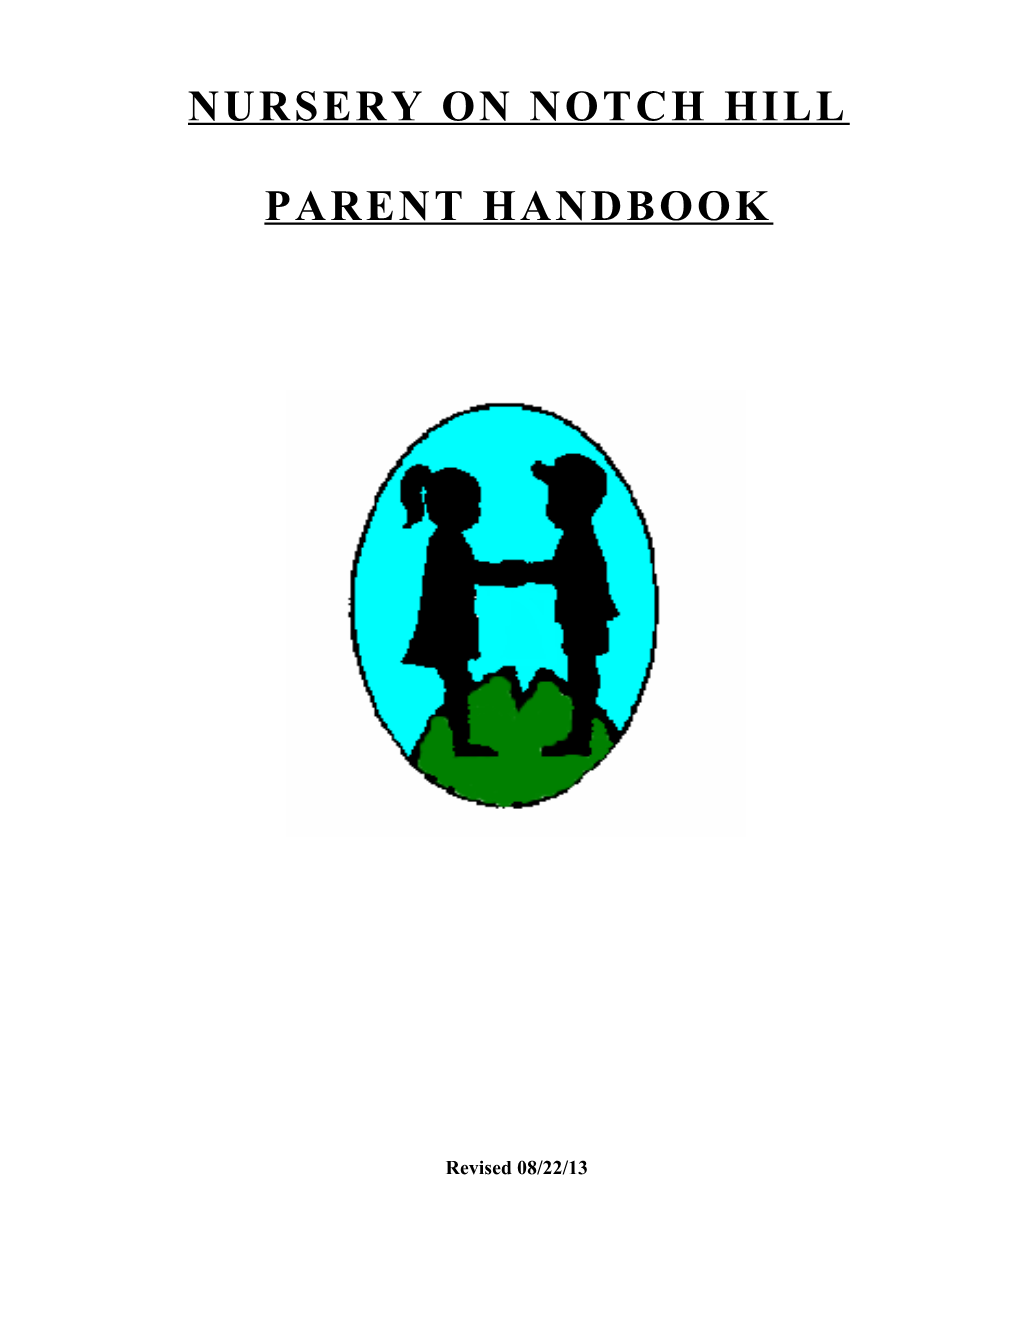 The Nursery on Notch Hill Parent Handbook